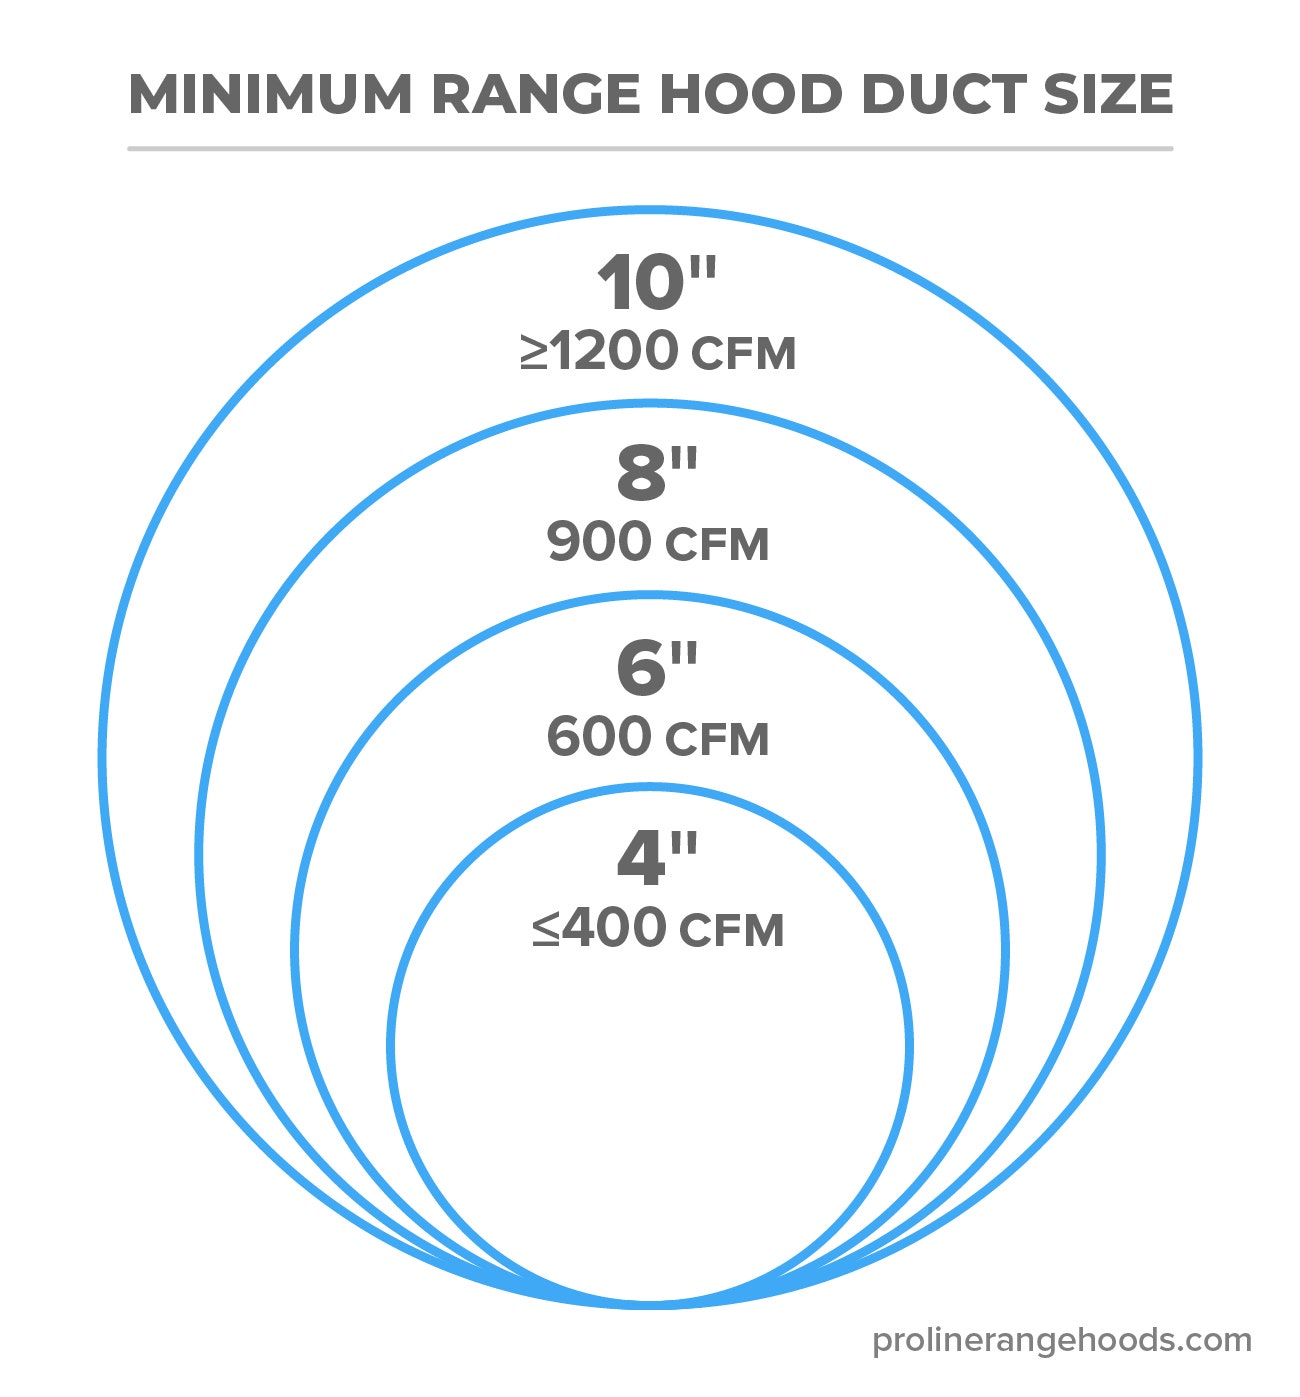 Minimum range hood duct size from  - Proline Range Hoods - prolinerangehoods.com